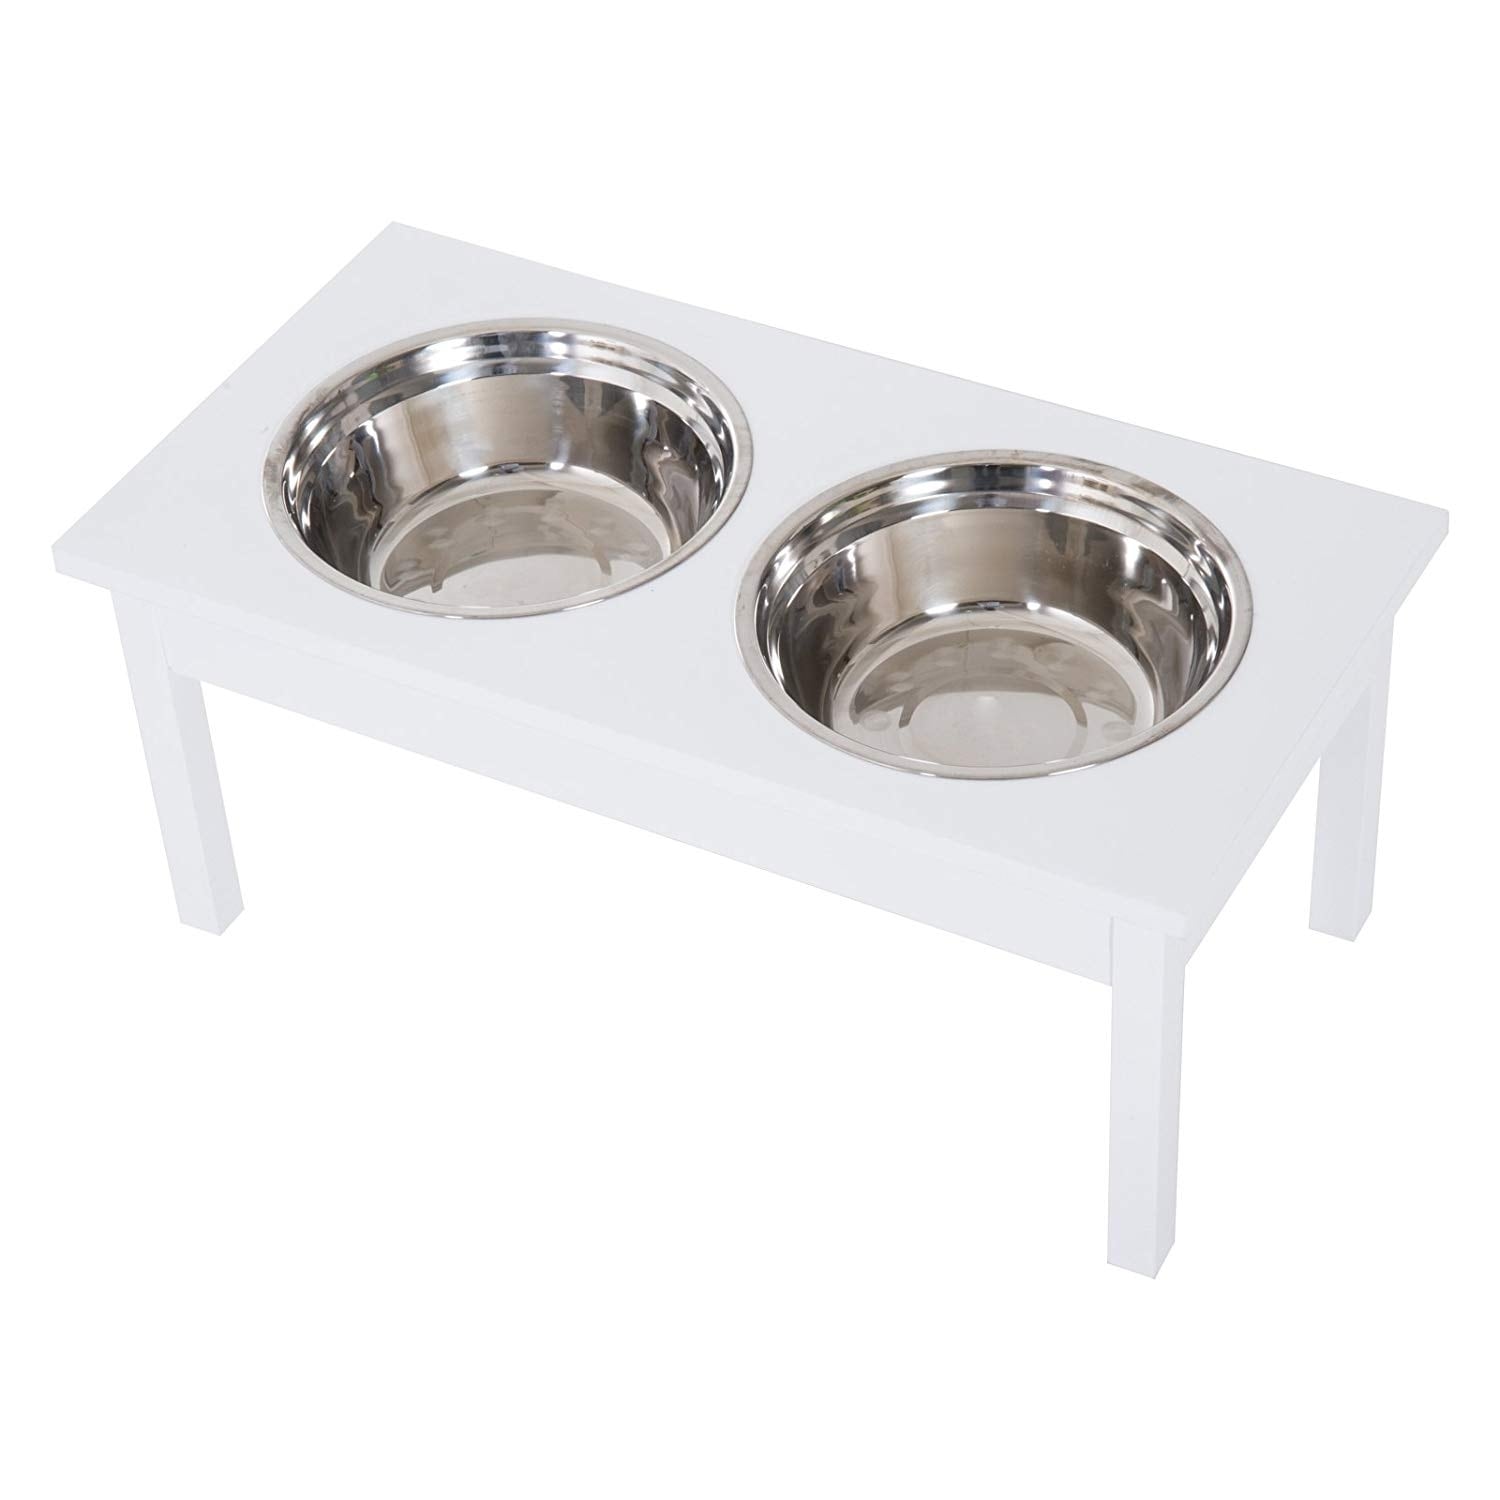 PawHut 17 Dog Feeding Station with 2 Food Bowls, White - Bed Bath